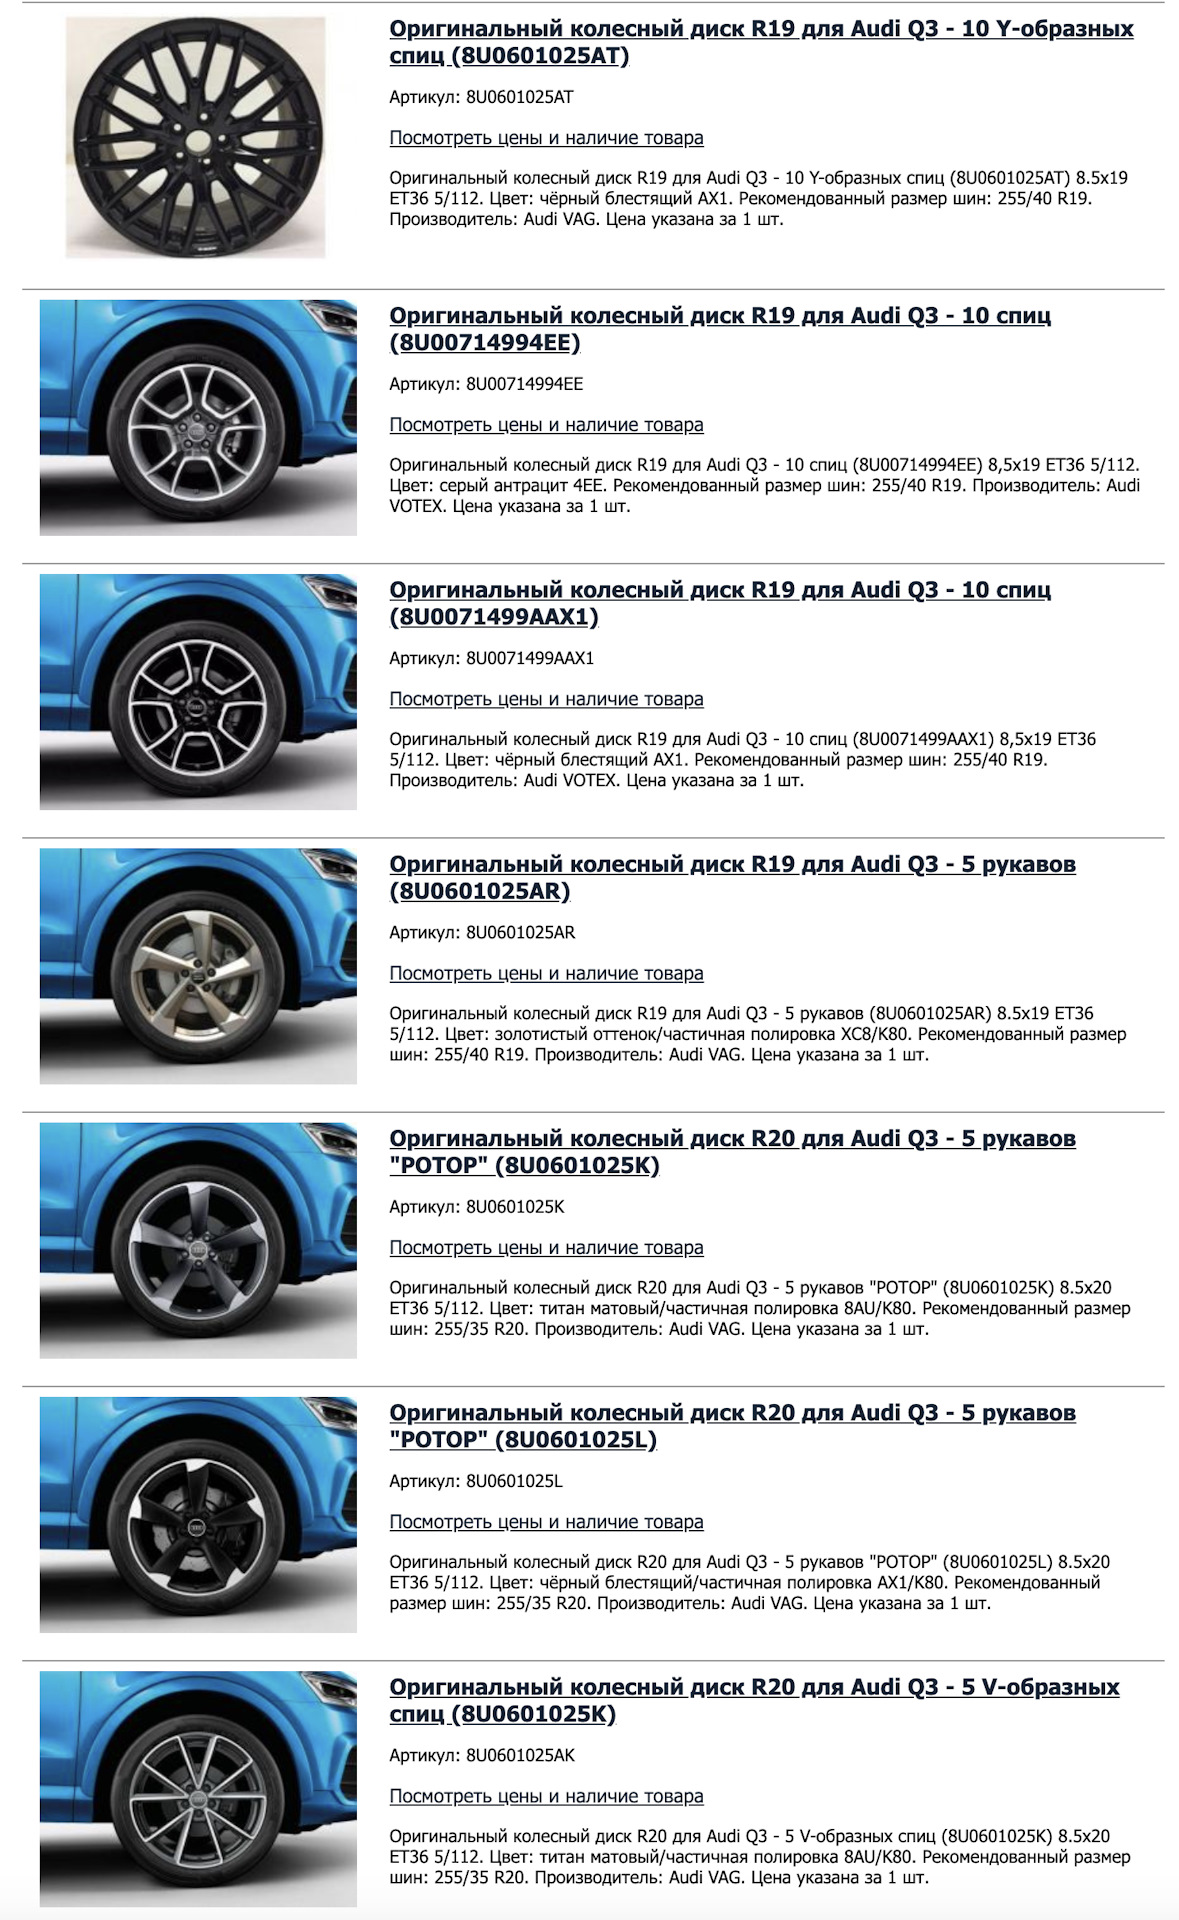 Ауди с4 размер колес. Типоразмер шин на Audi q5 8r. Ауди q5 2012 года размер резины. Ауди q3 2013 заводские параметры колес. Вылет диска на Ауди а5.